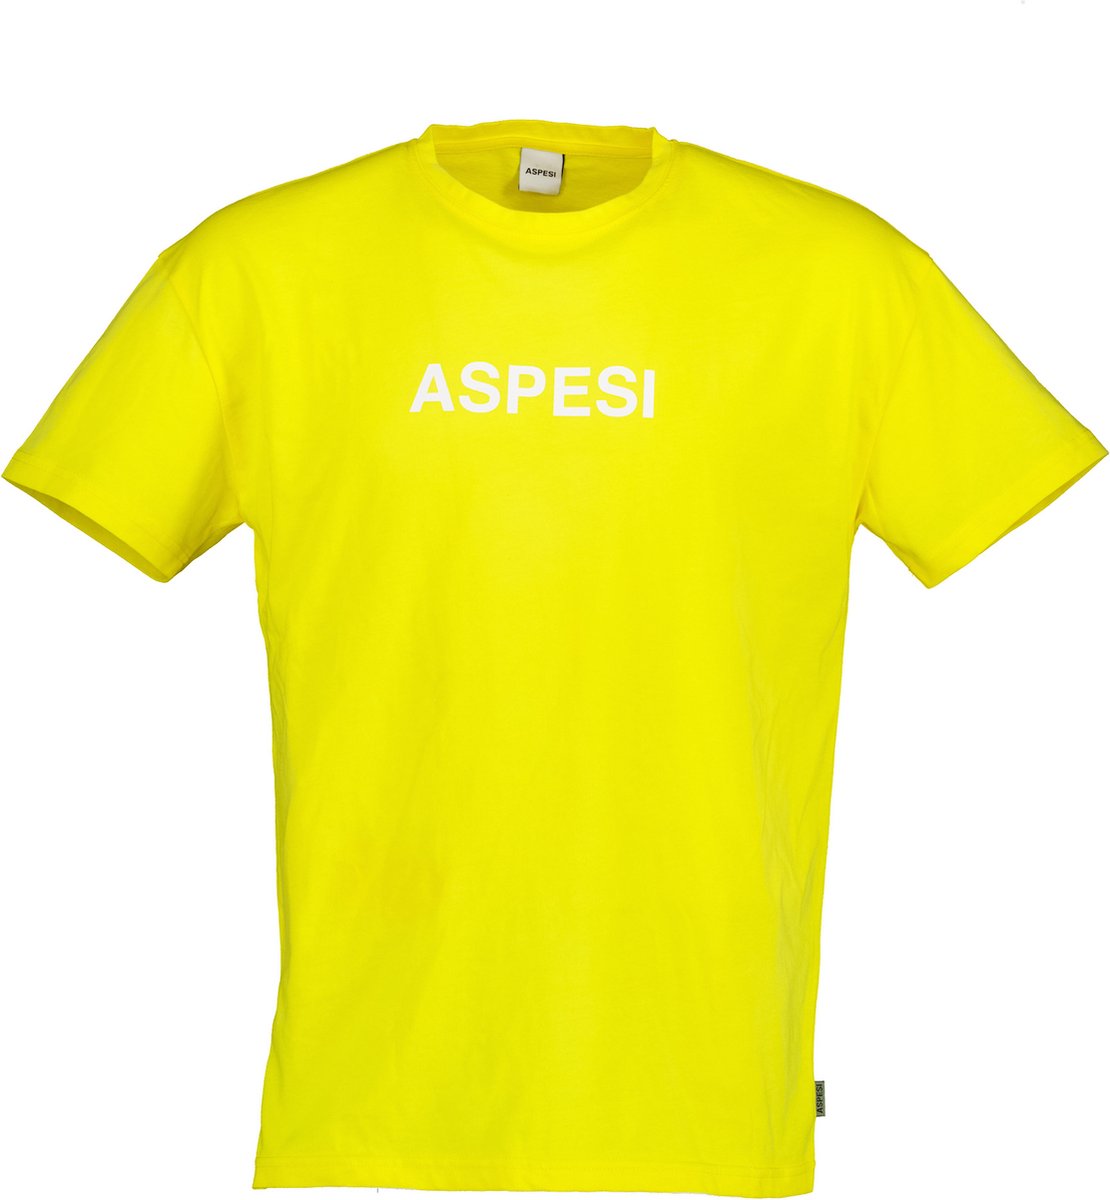 Aspesi Shirt Geel Katoen maat S Basic t-shirts geel